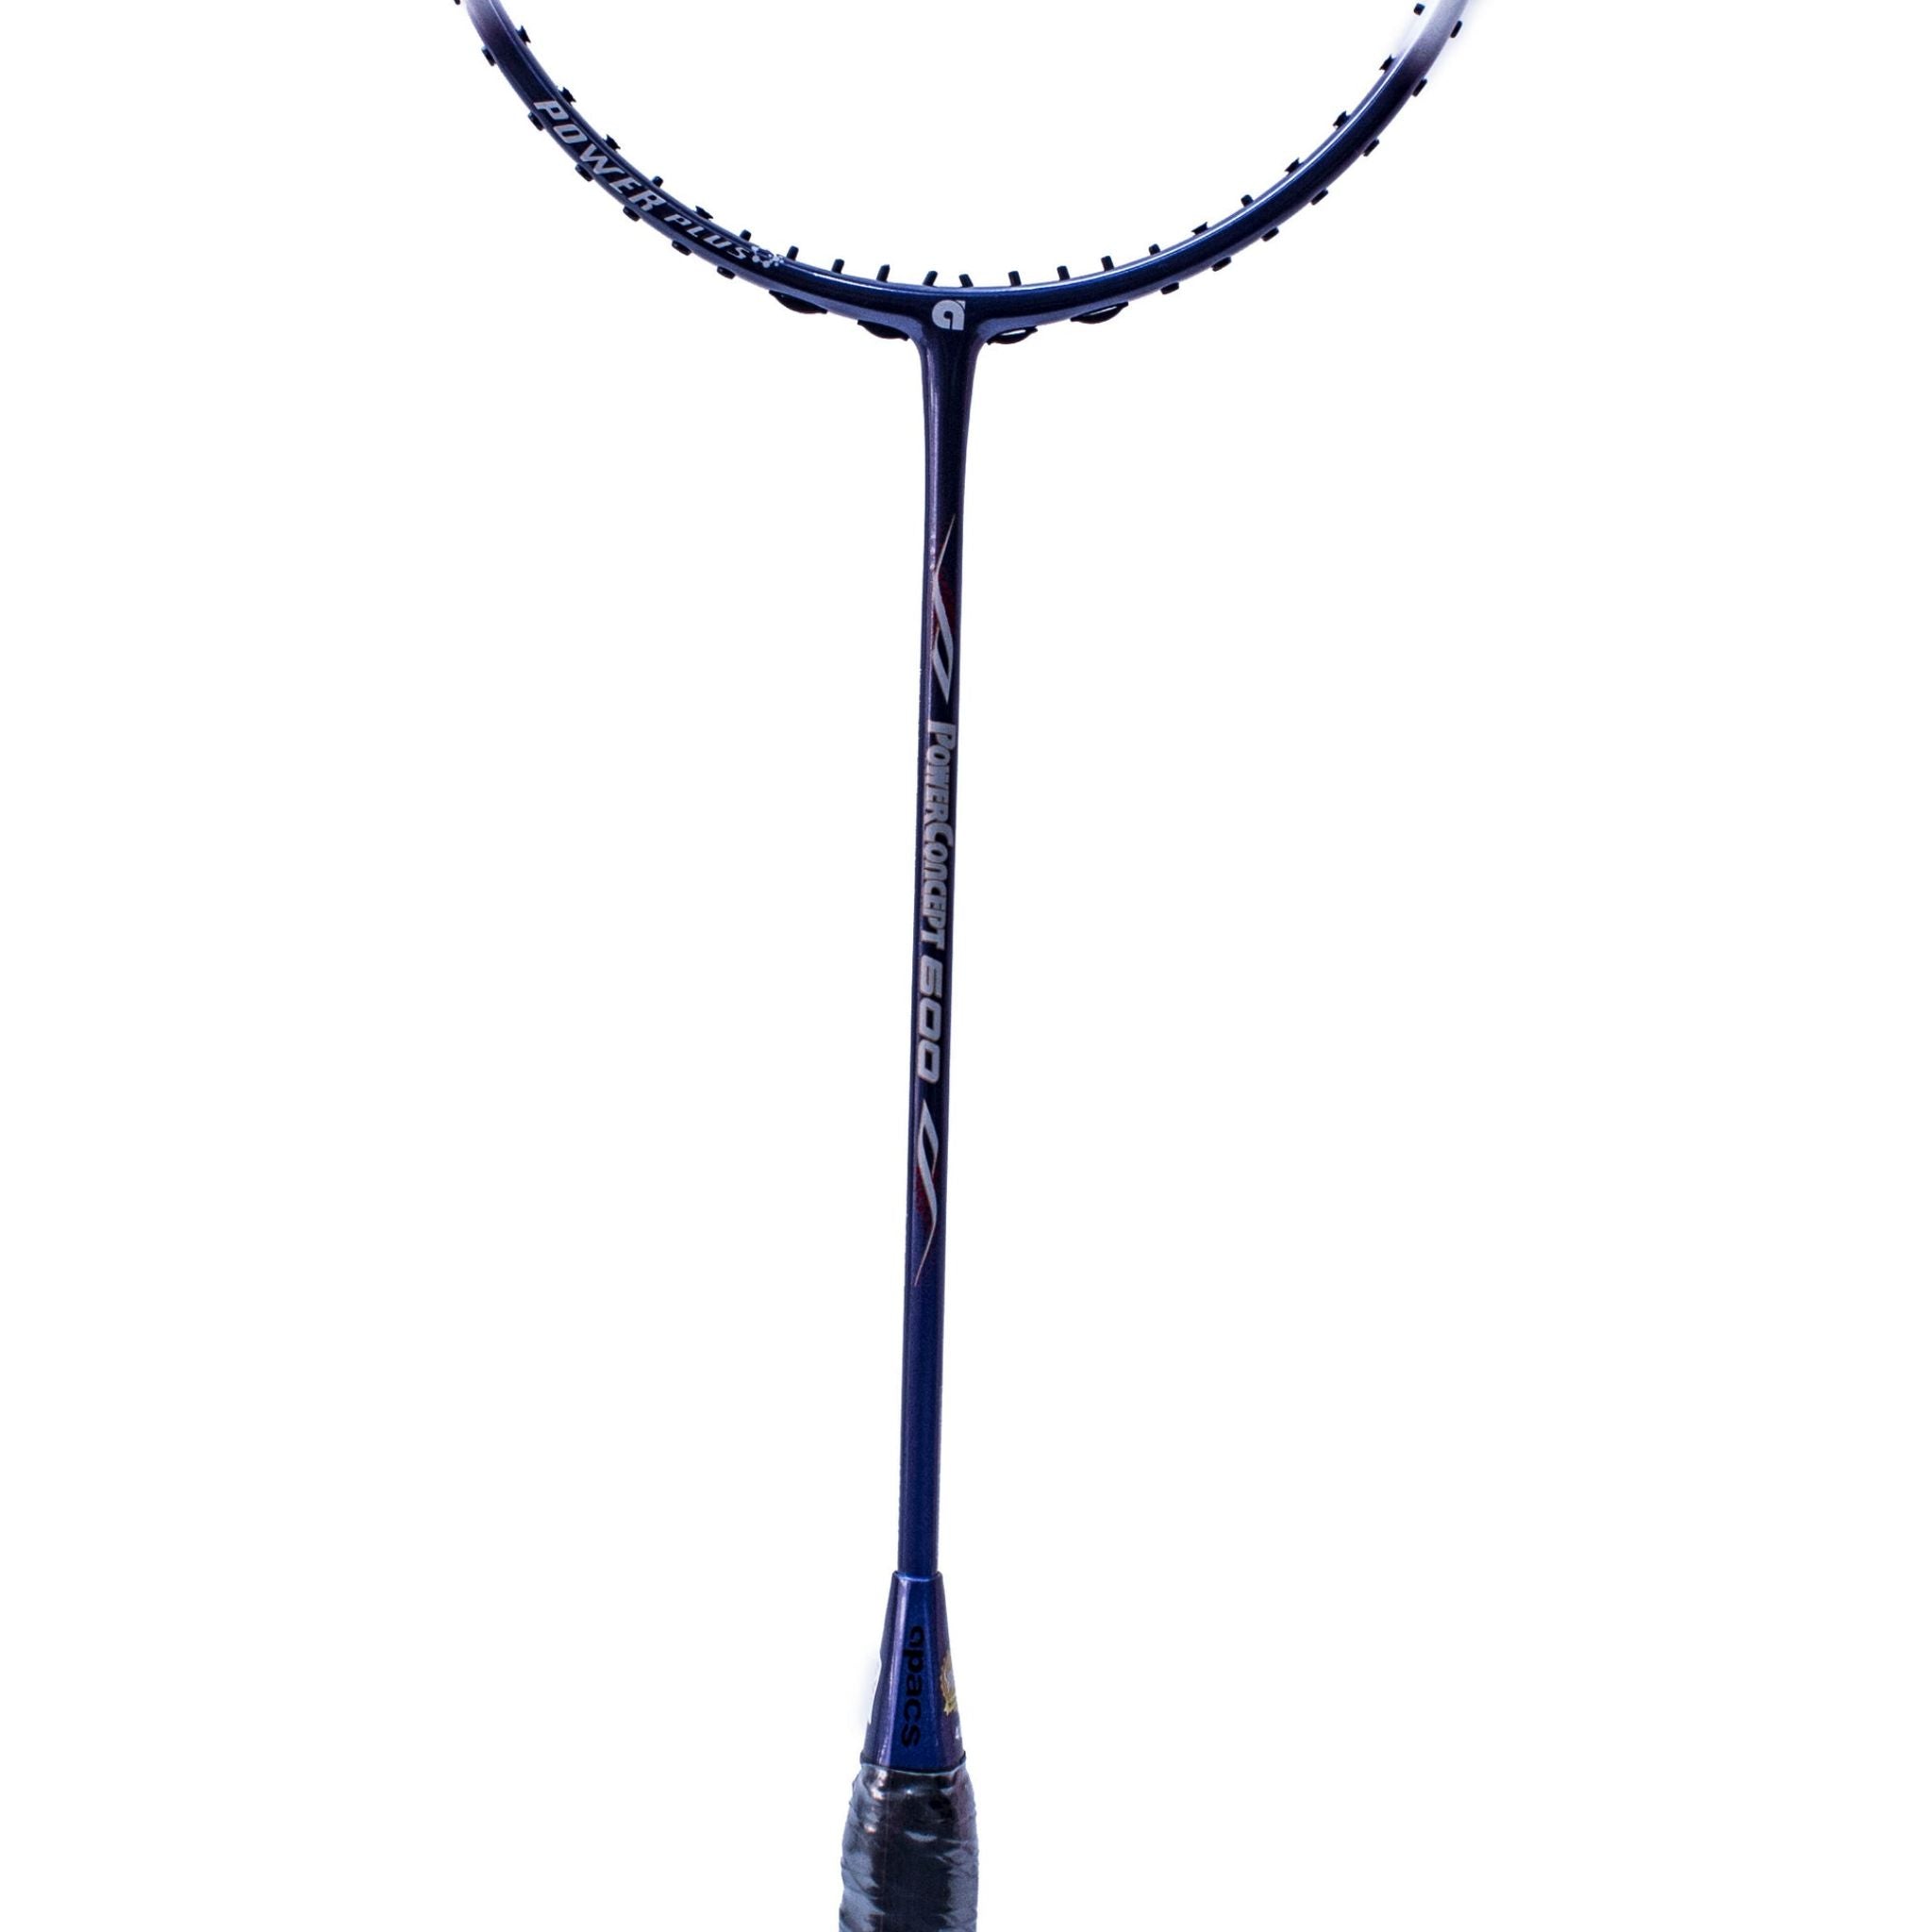 APACS Power Concept 600 Badminton Racket